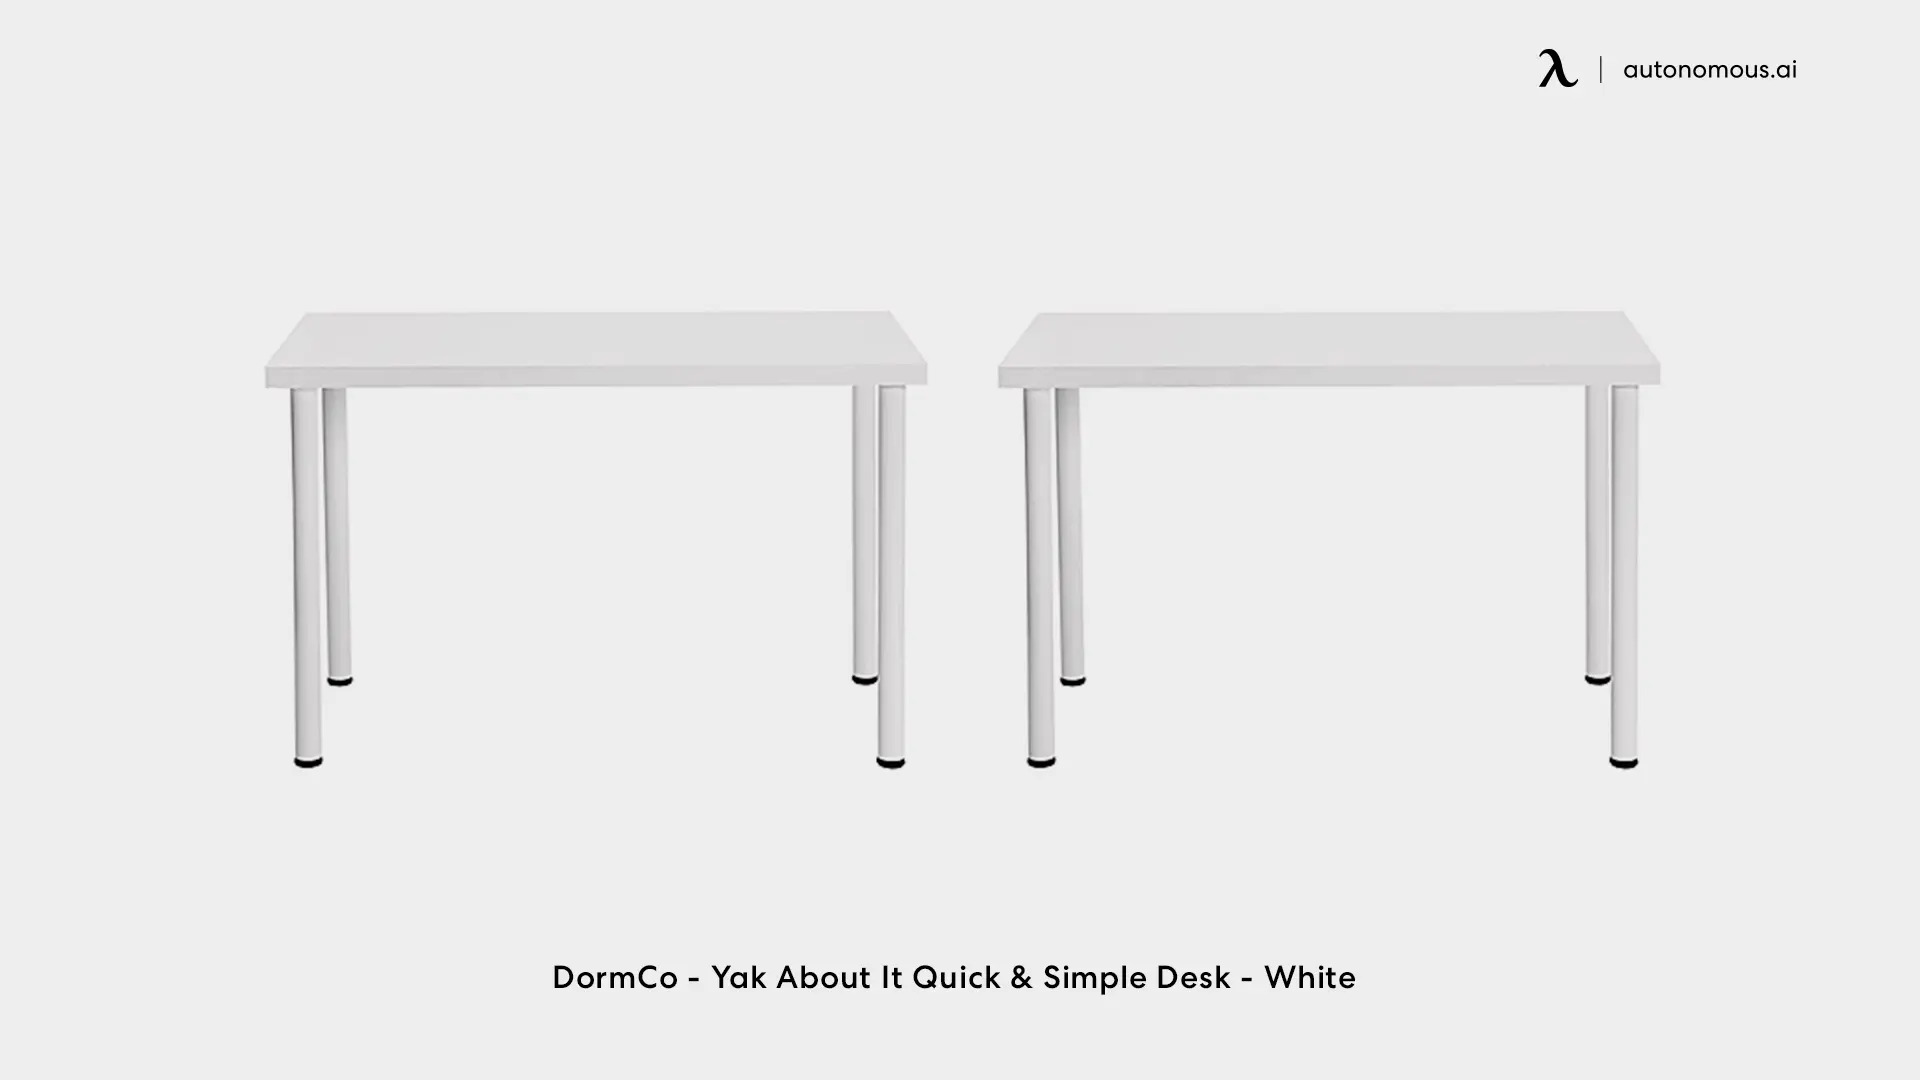 DormCo - Yak About It Quick & Simple Desk - White